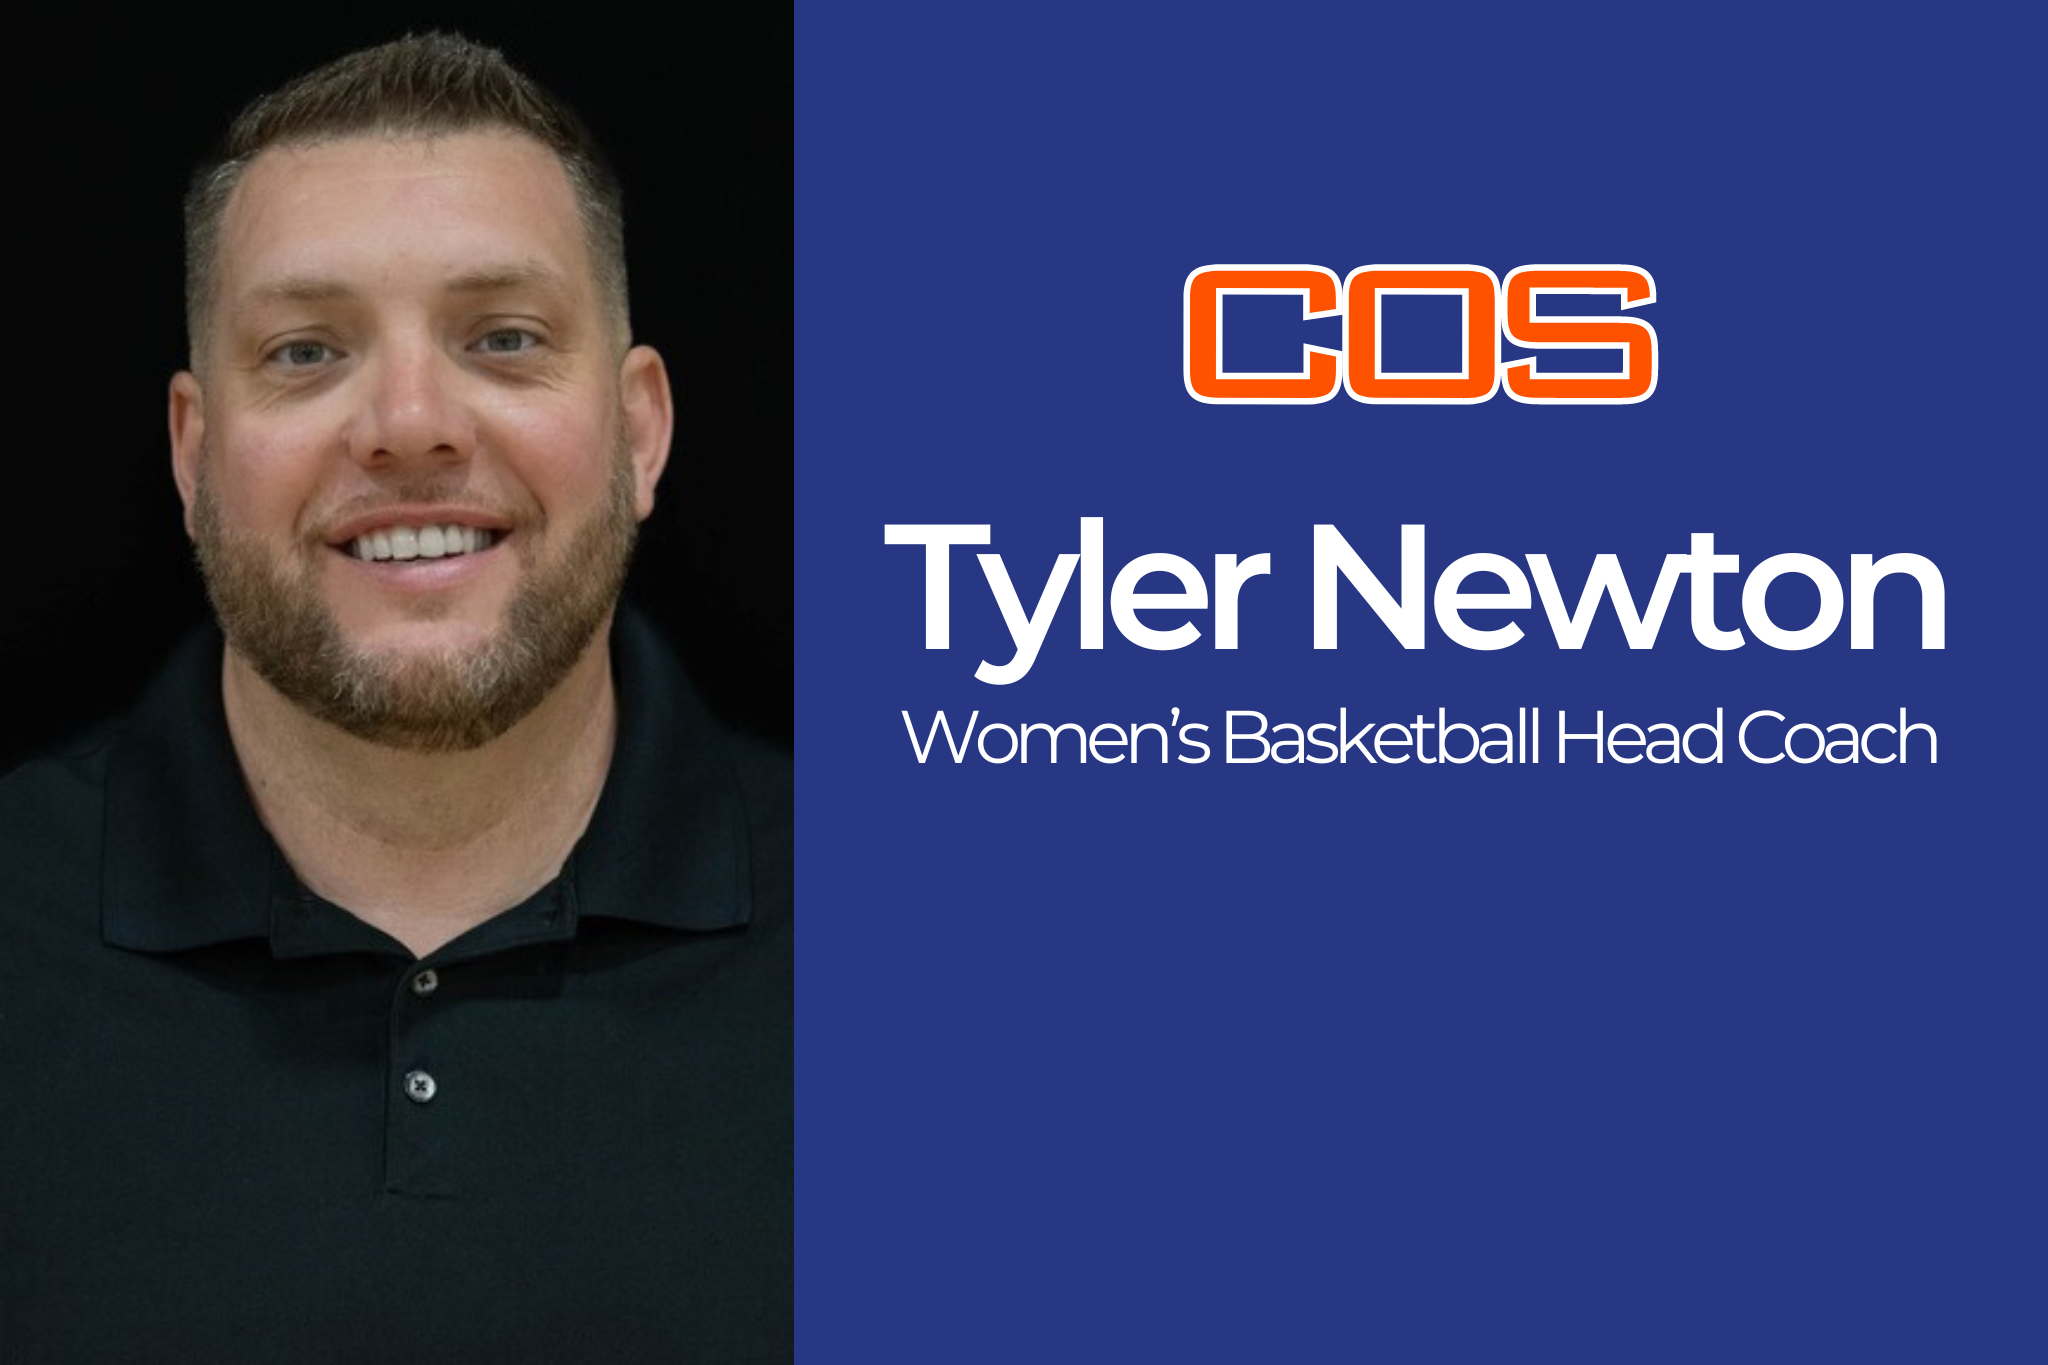 Tyler Newton Named Head Women's Basketball Coach